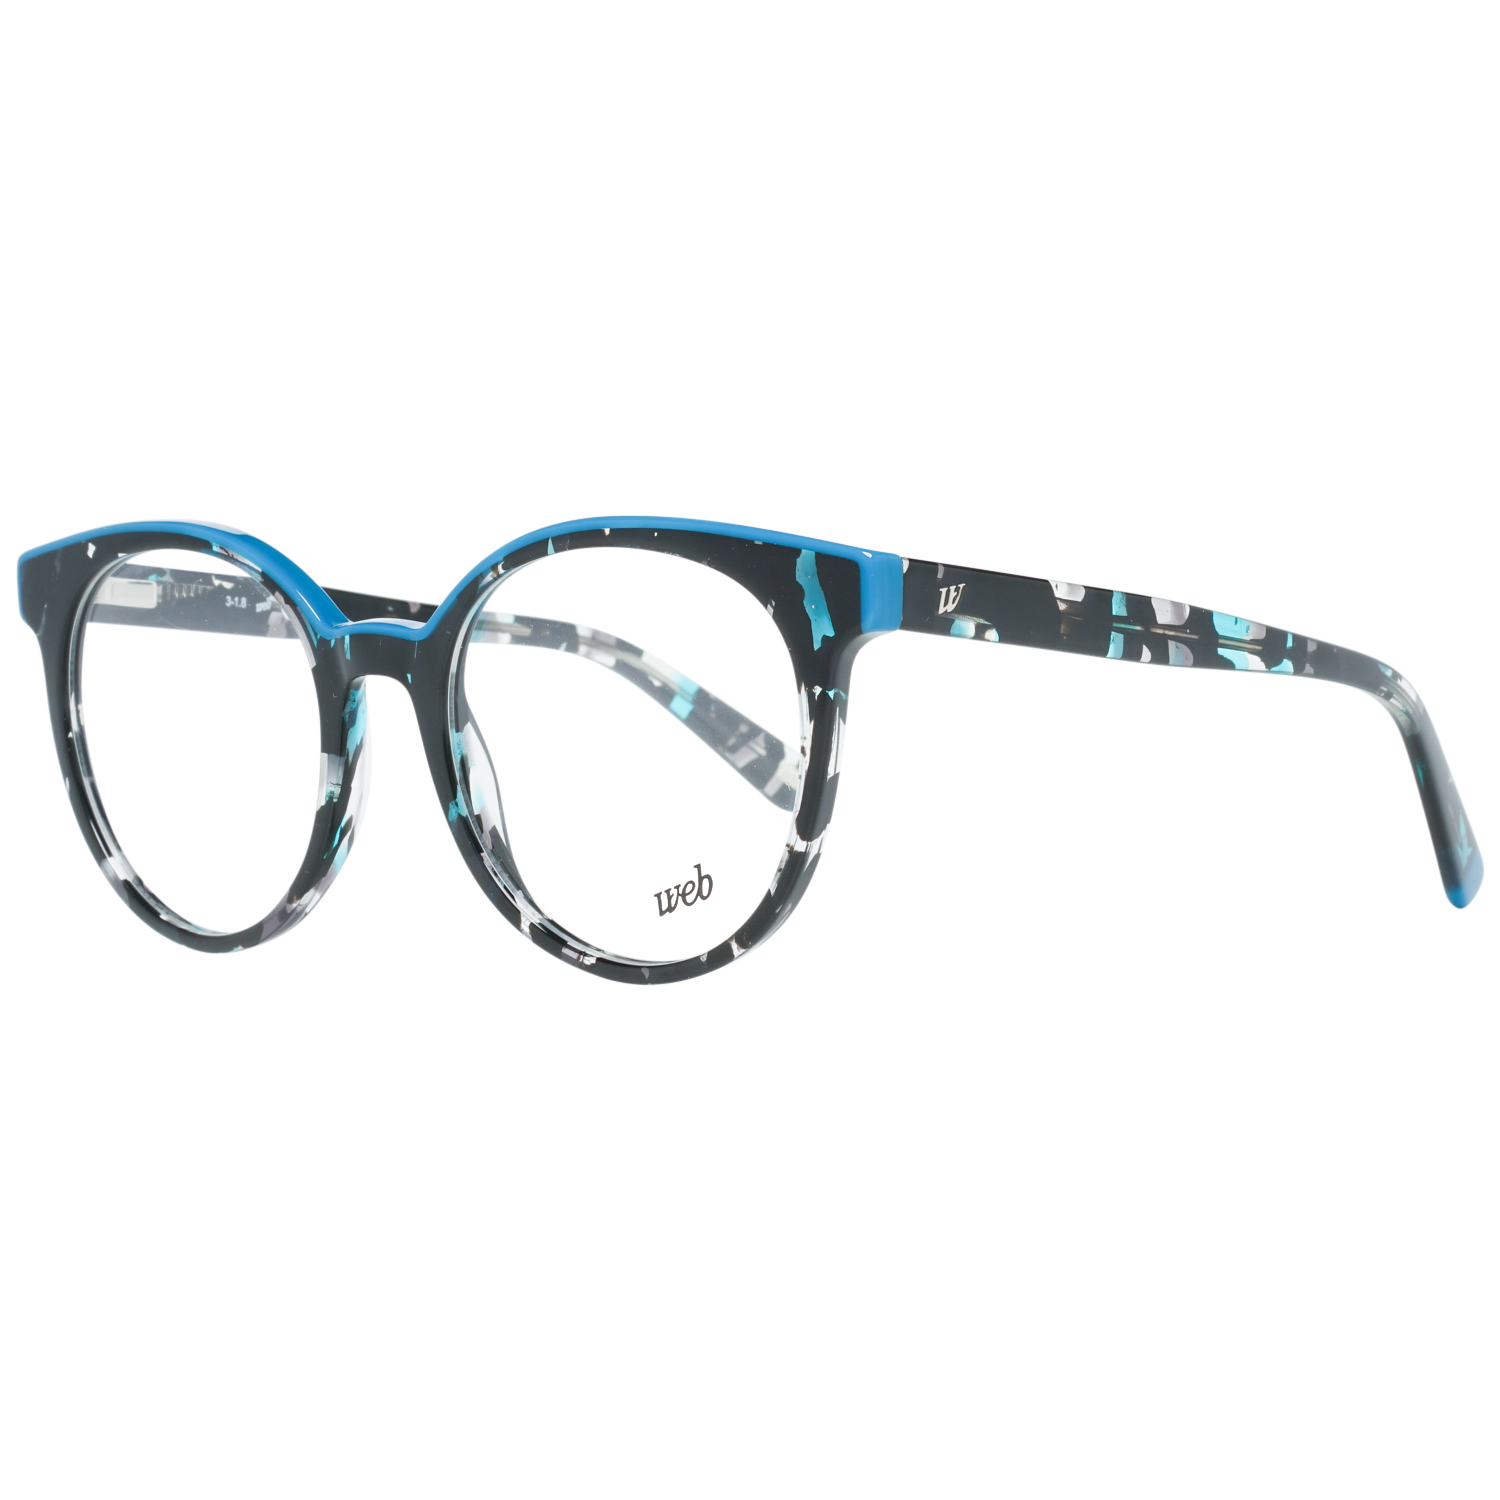 Web Frames Web Glasses Optical Frame WE5227 A55 49 Eyeglasses Eyewear UK USA Australia 